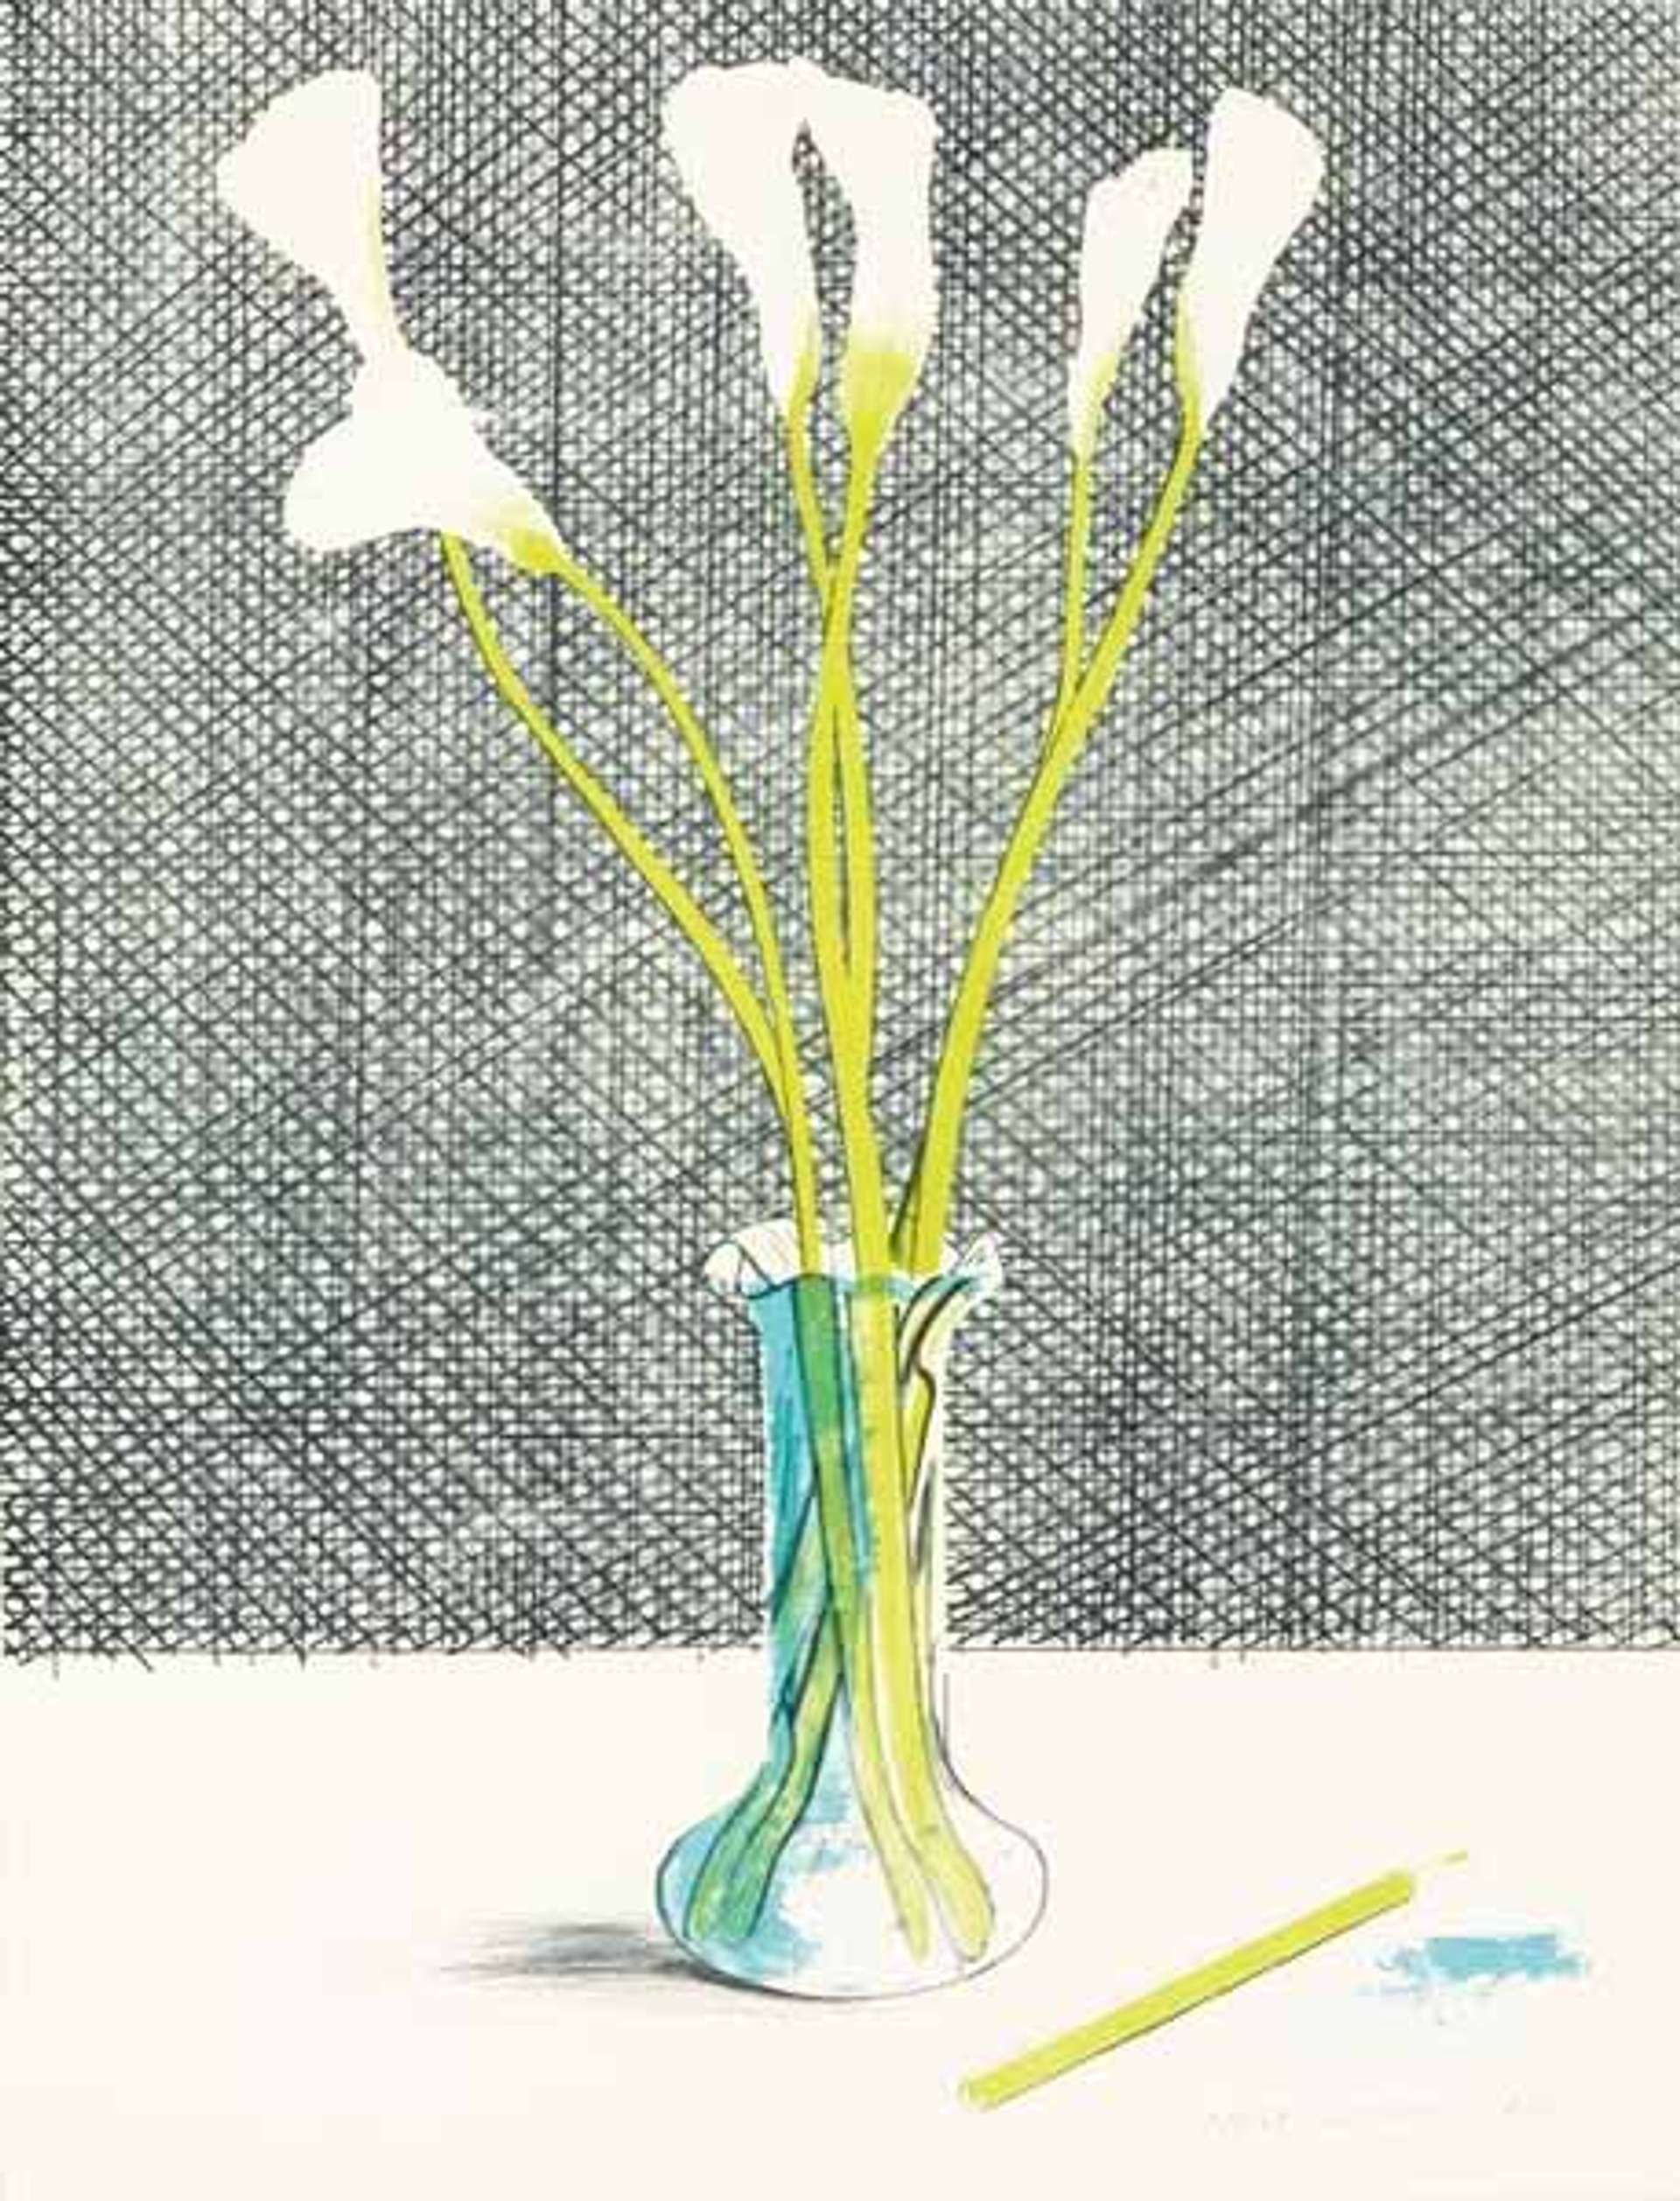 Lilies 1971 by David Hockney